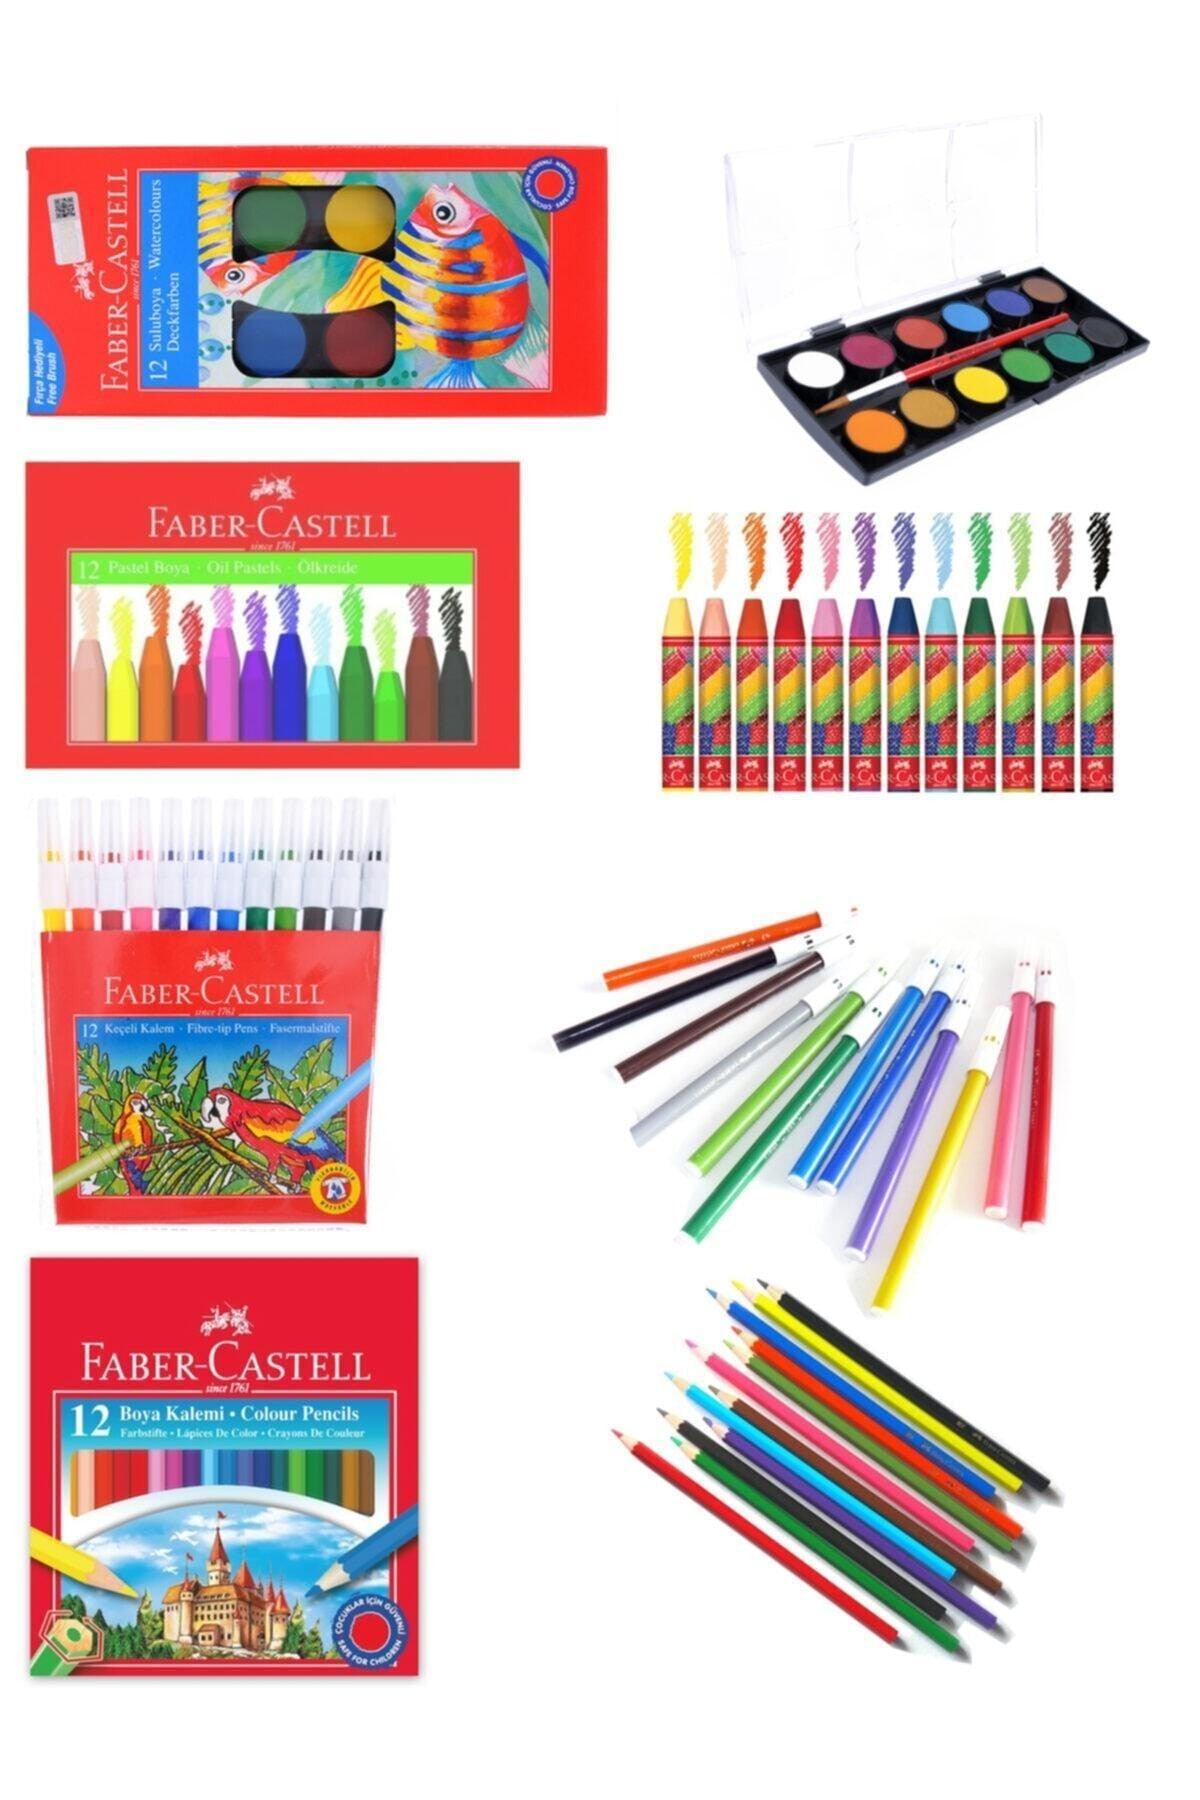 Faber-Castell Felt-tip pens - Set of 12